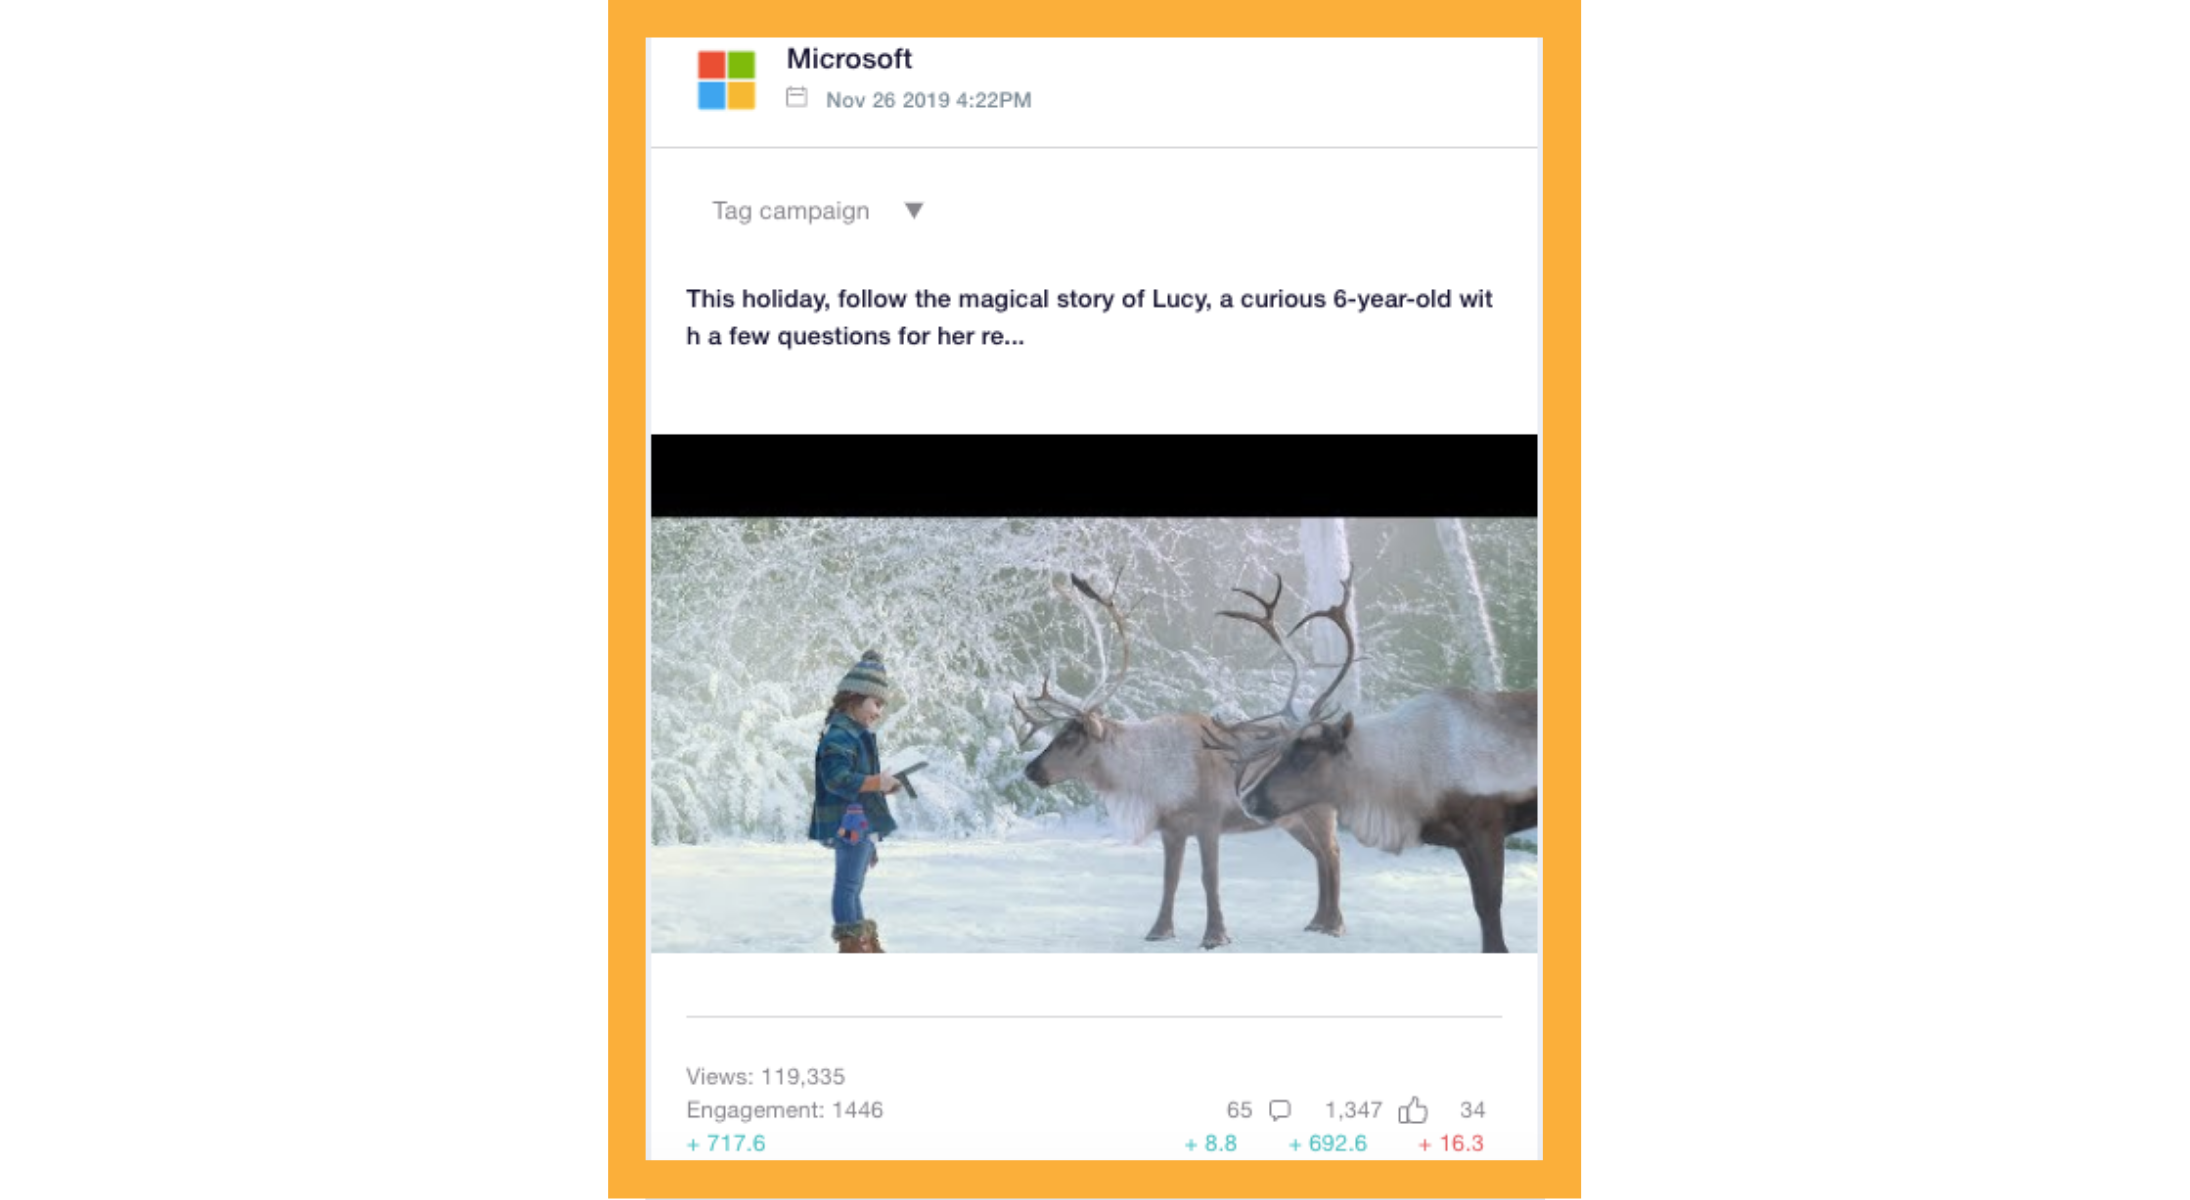 Microsoft Christmas Advert Performance